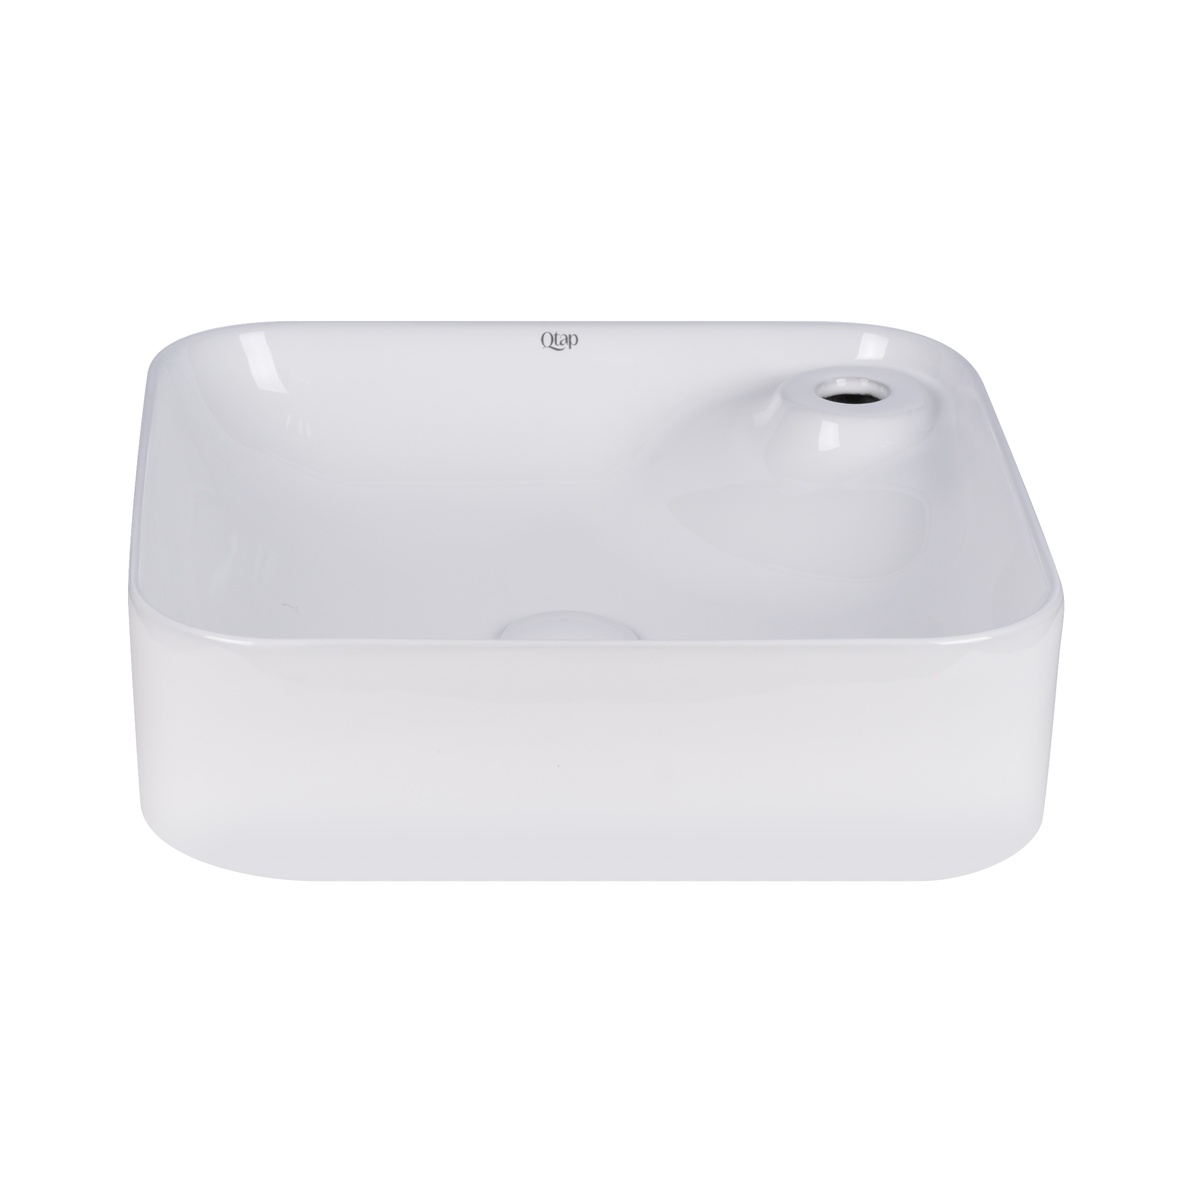 Раковина накладная на столешницу для ванной 430мм x 430мм Q-TAP Stork белый квадратная QT15112194W